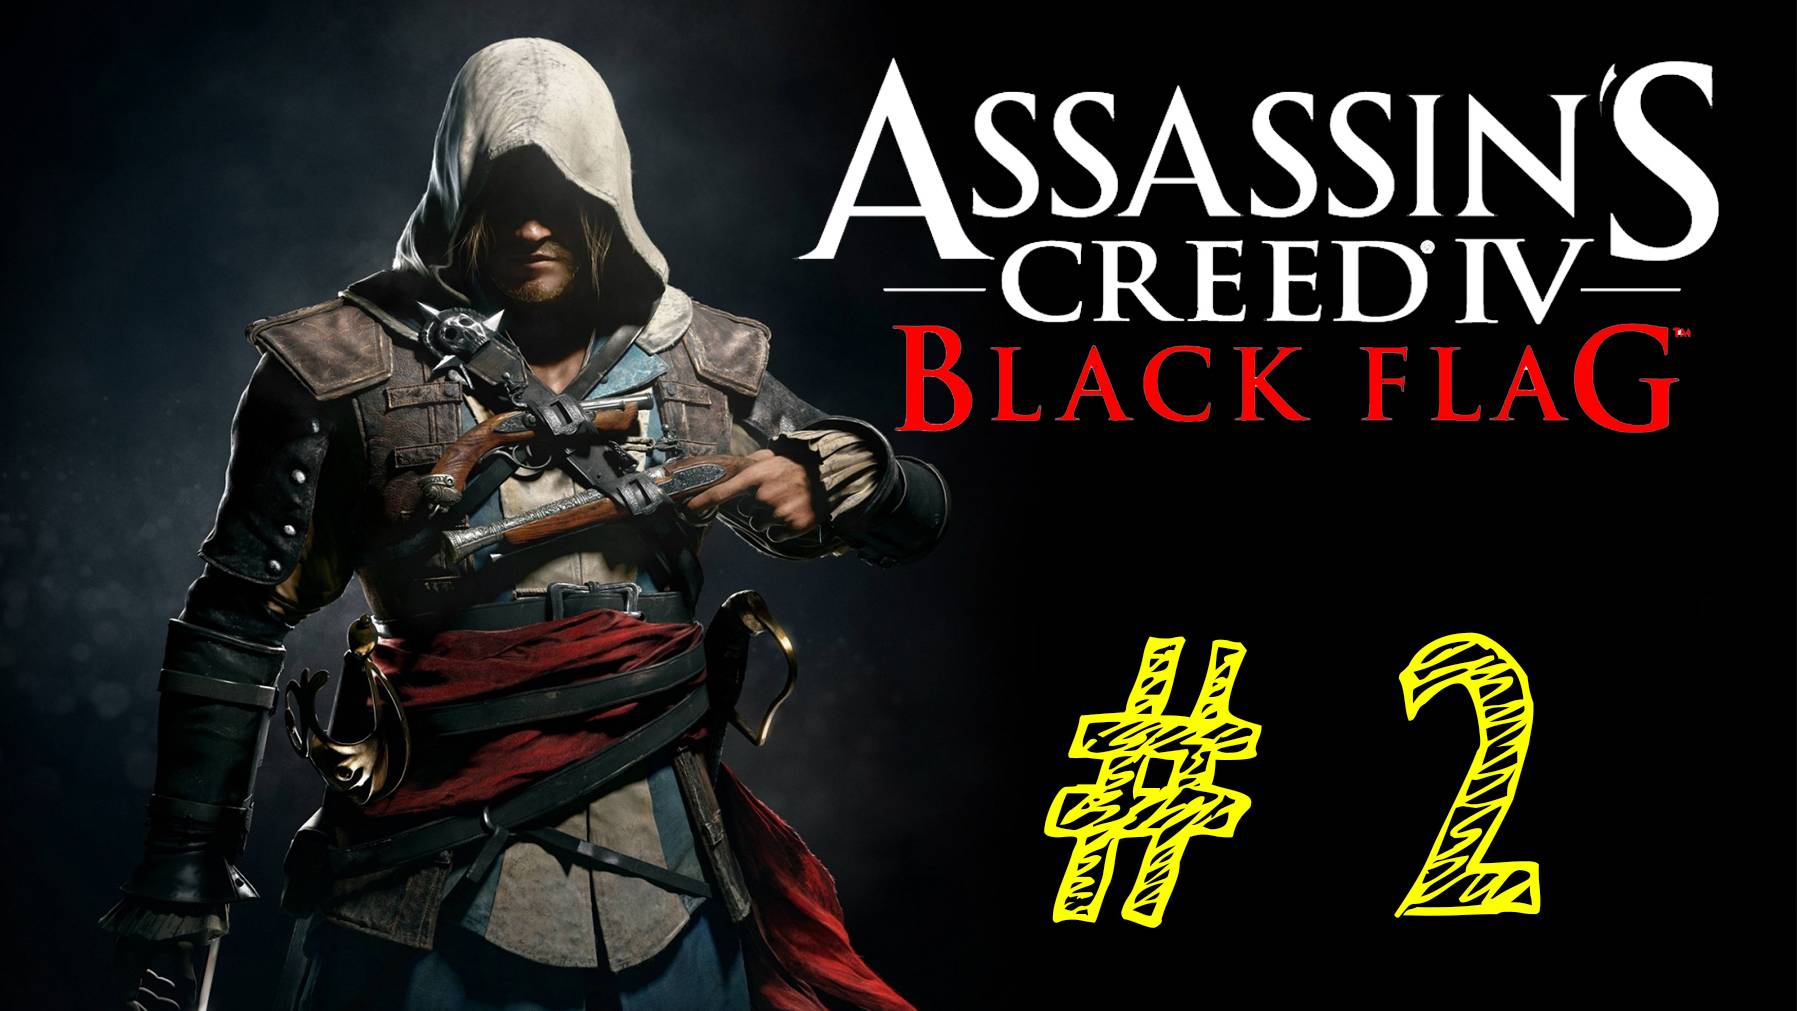 Assassin's Creed IV Black Flag. Начало пути. 2 выпуск. Путь пирата. Пиратское приключение